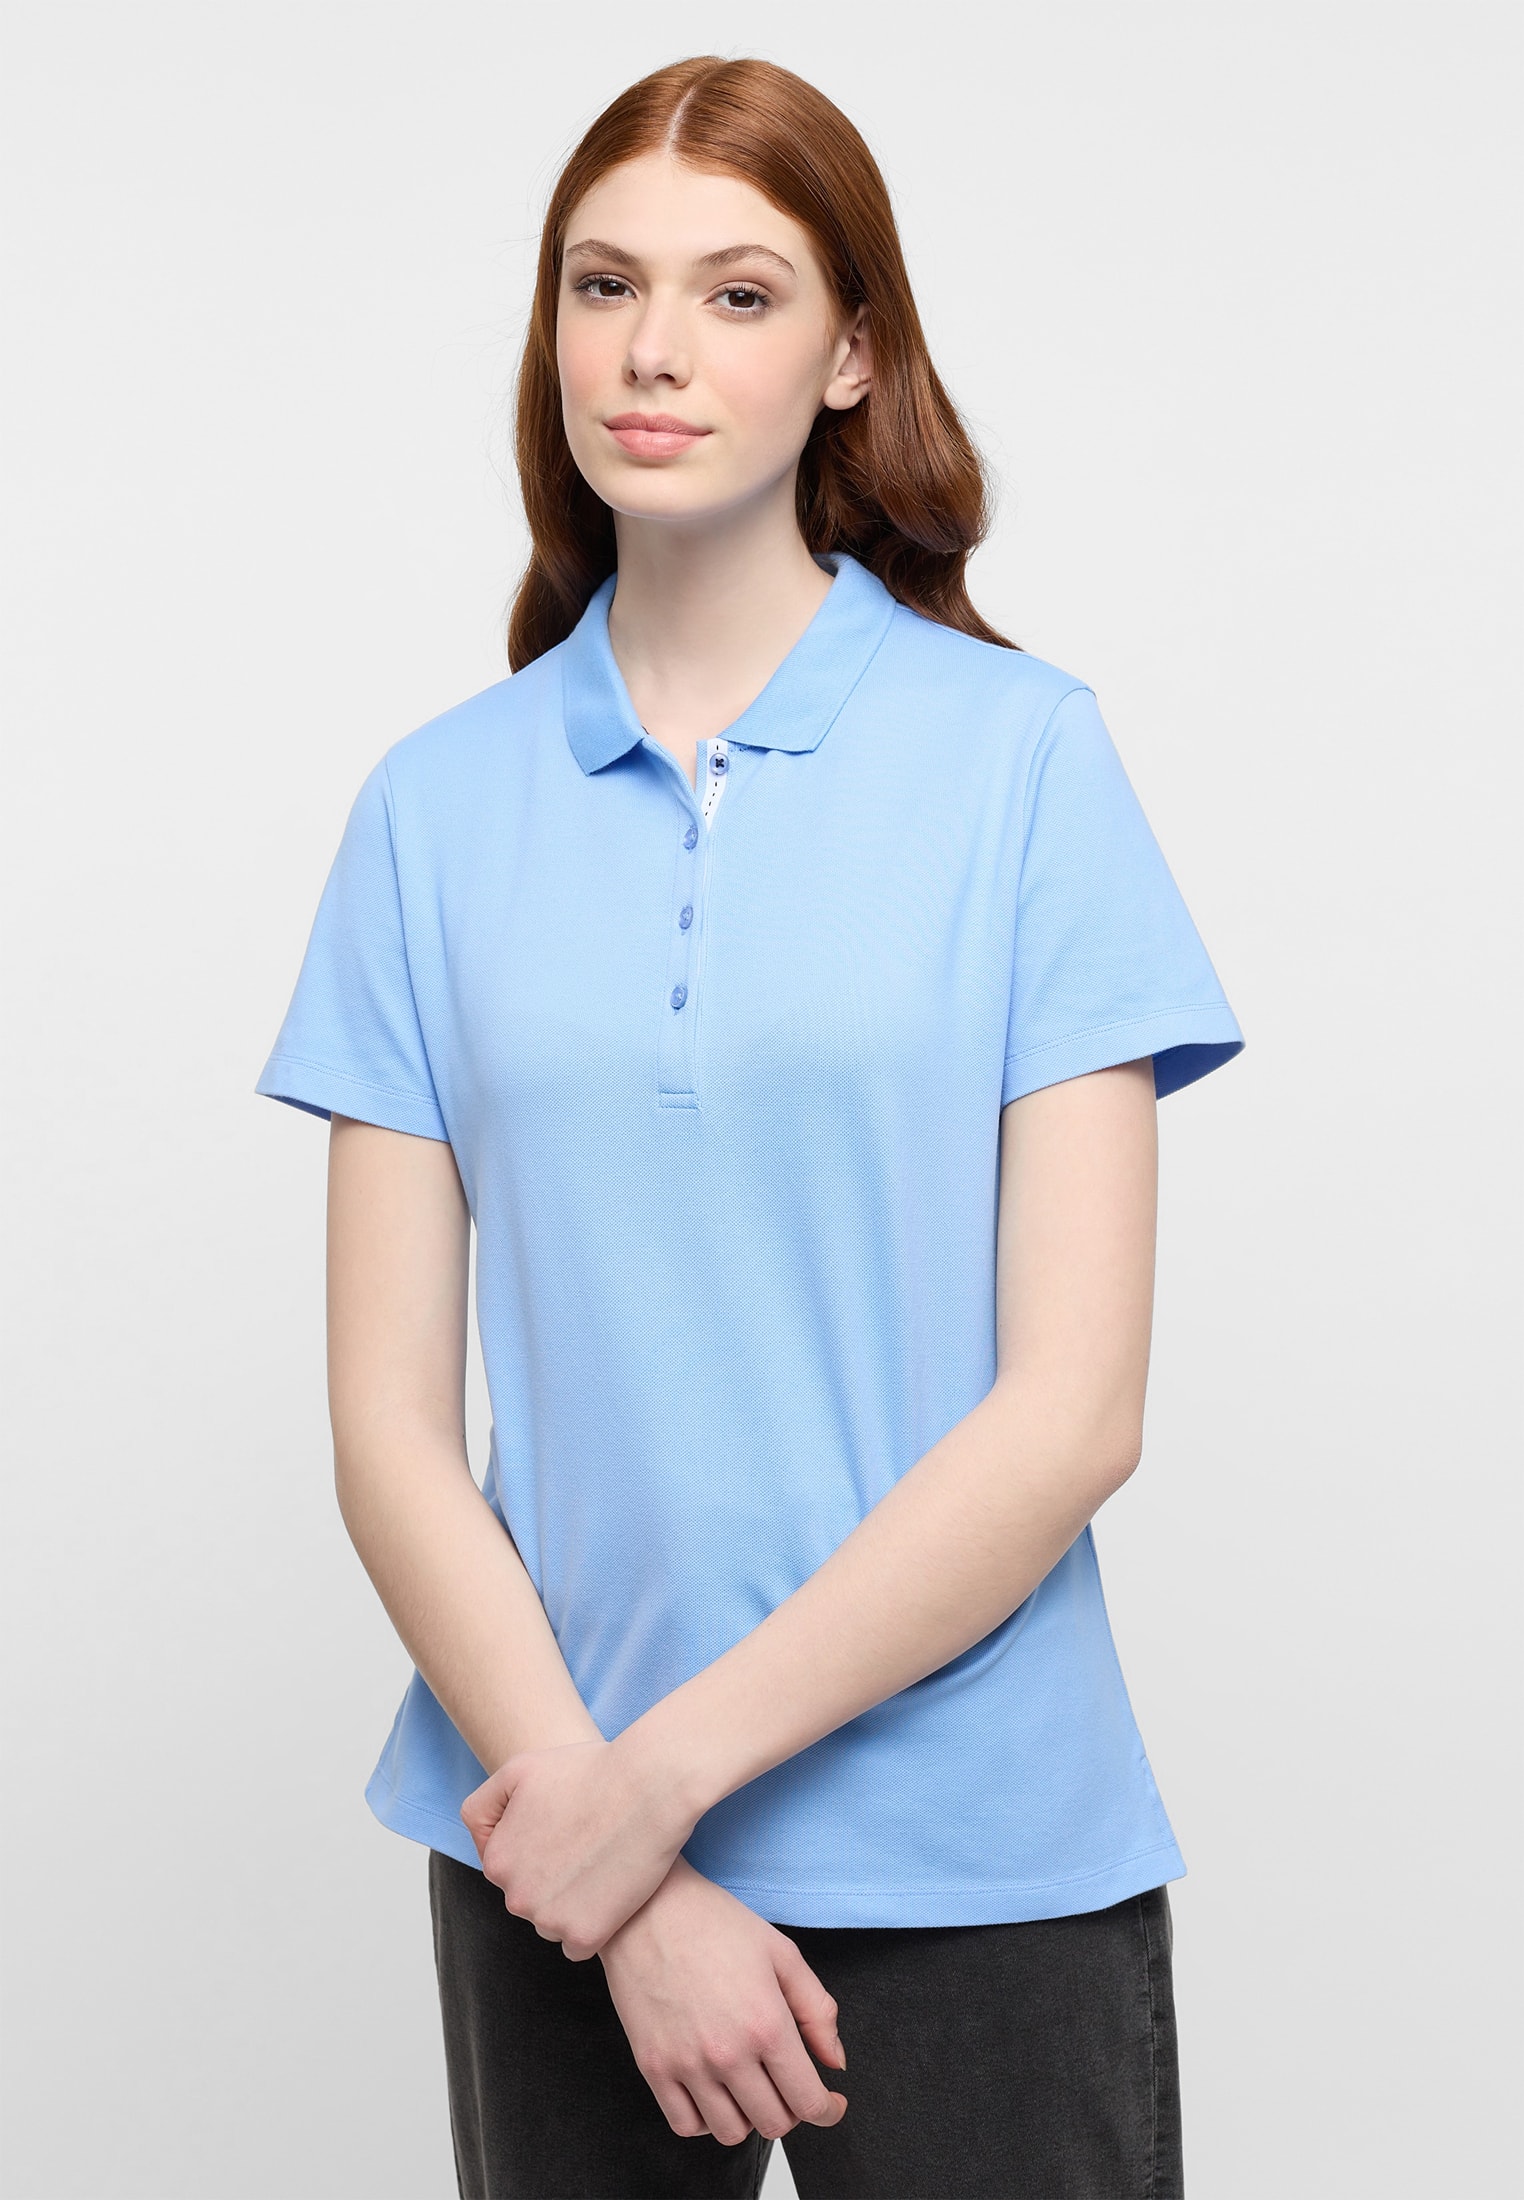 Poloshirt in hellblau unifarben